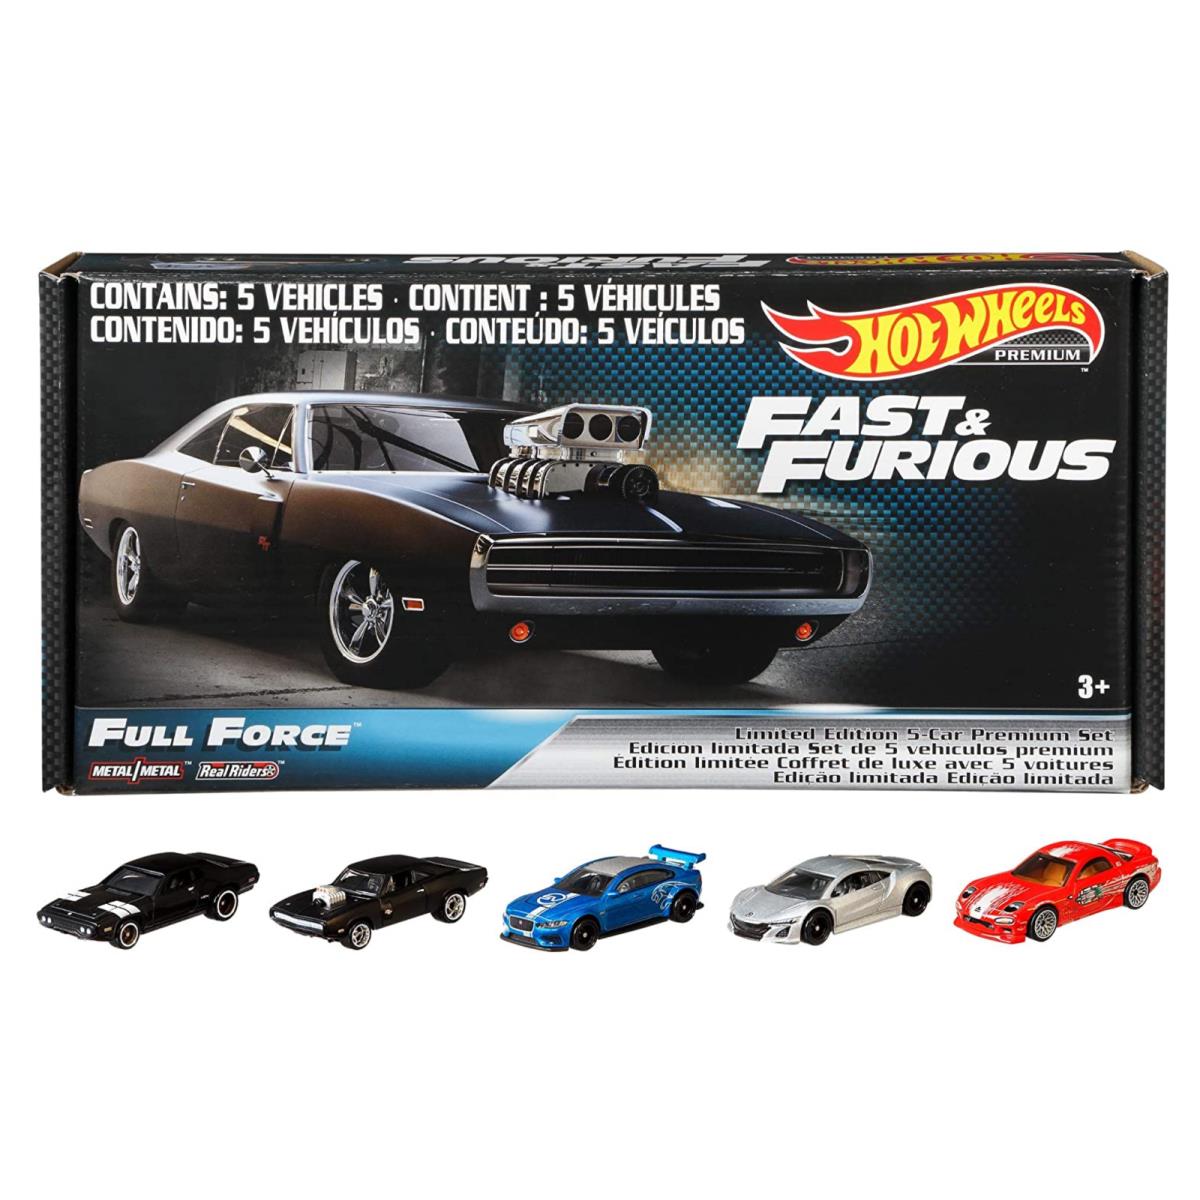 2020 Hot Wheels Premium Fast Furious Full Force 5 Pack Box Set